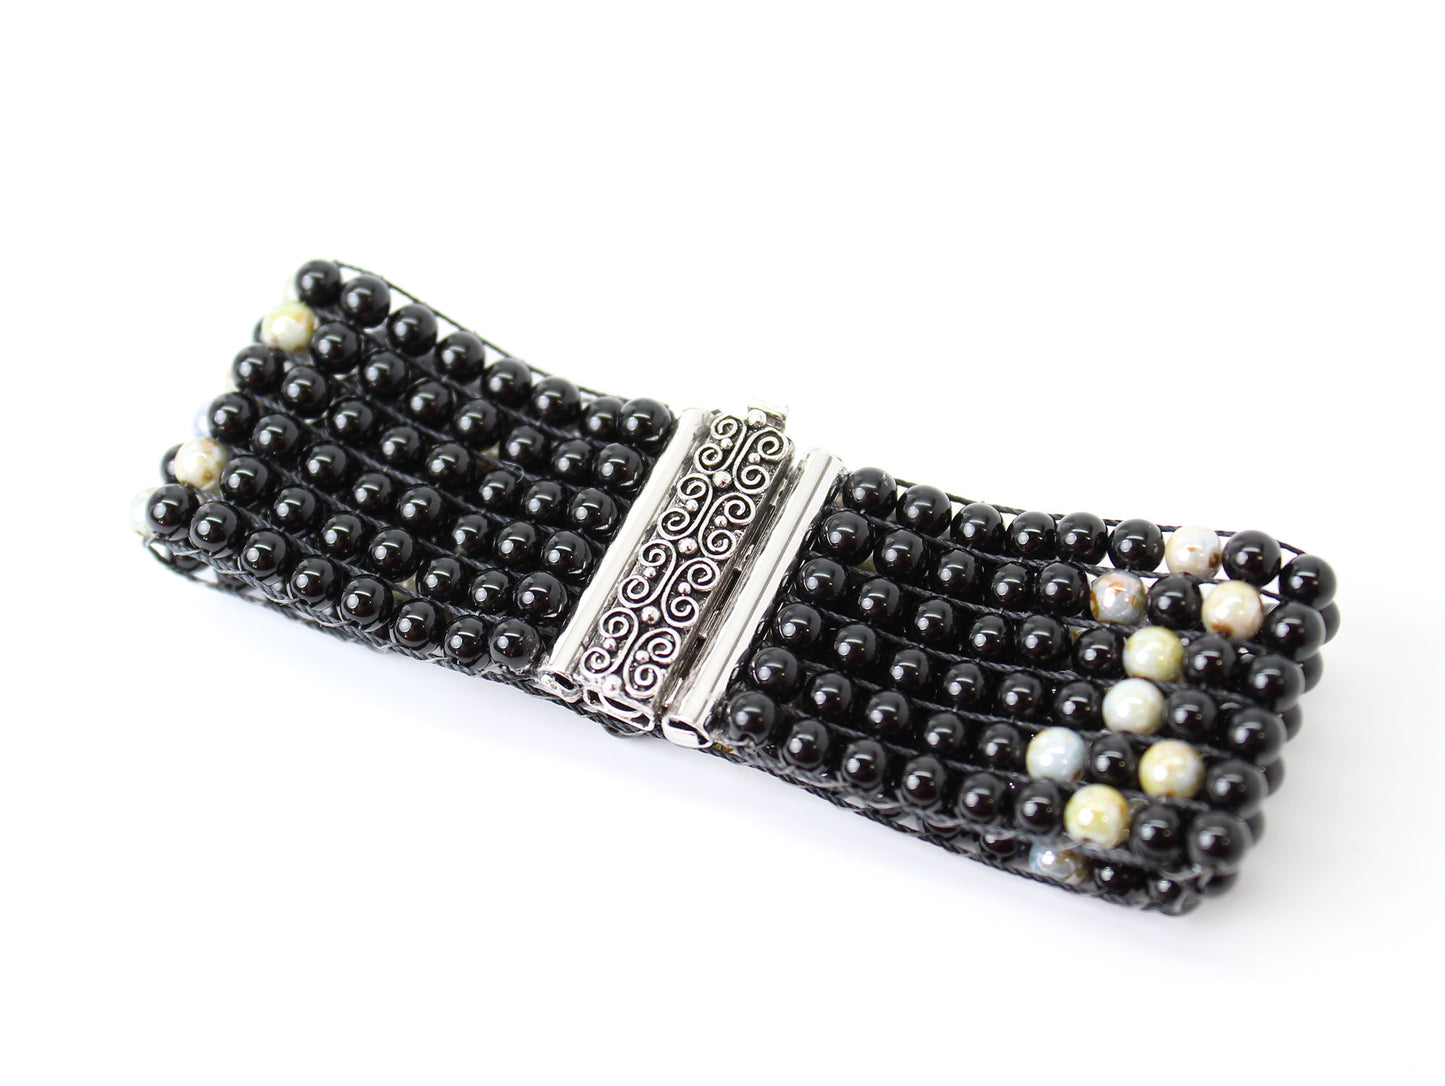 Black Onyx Loom Woven Bracelet